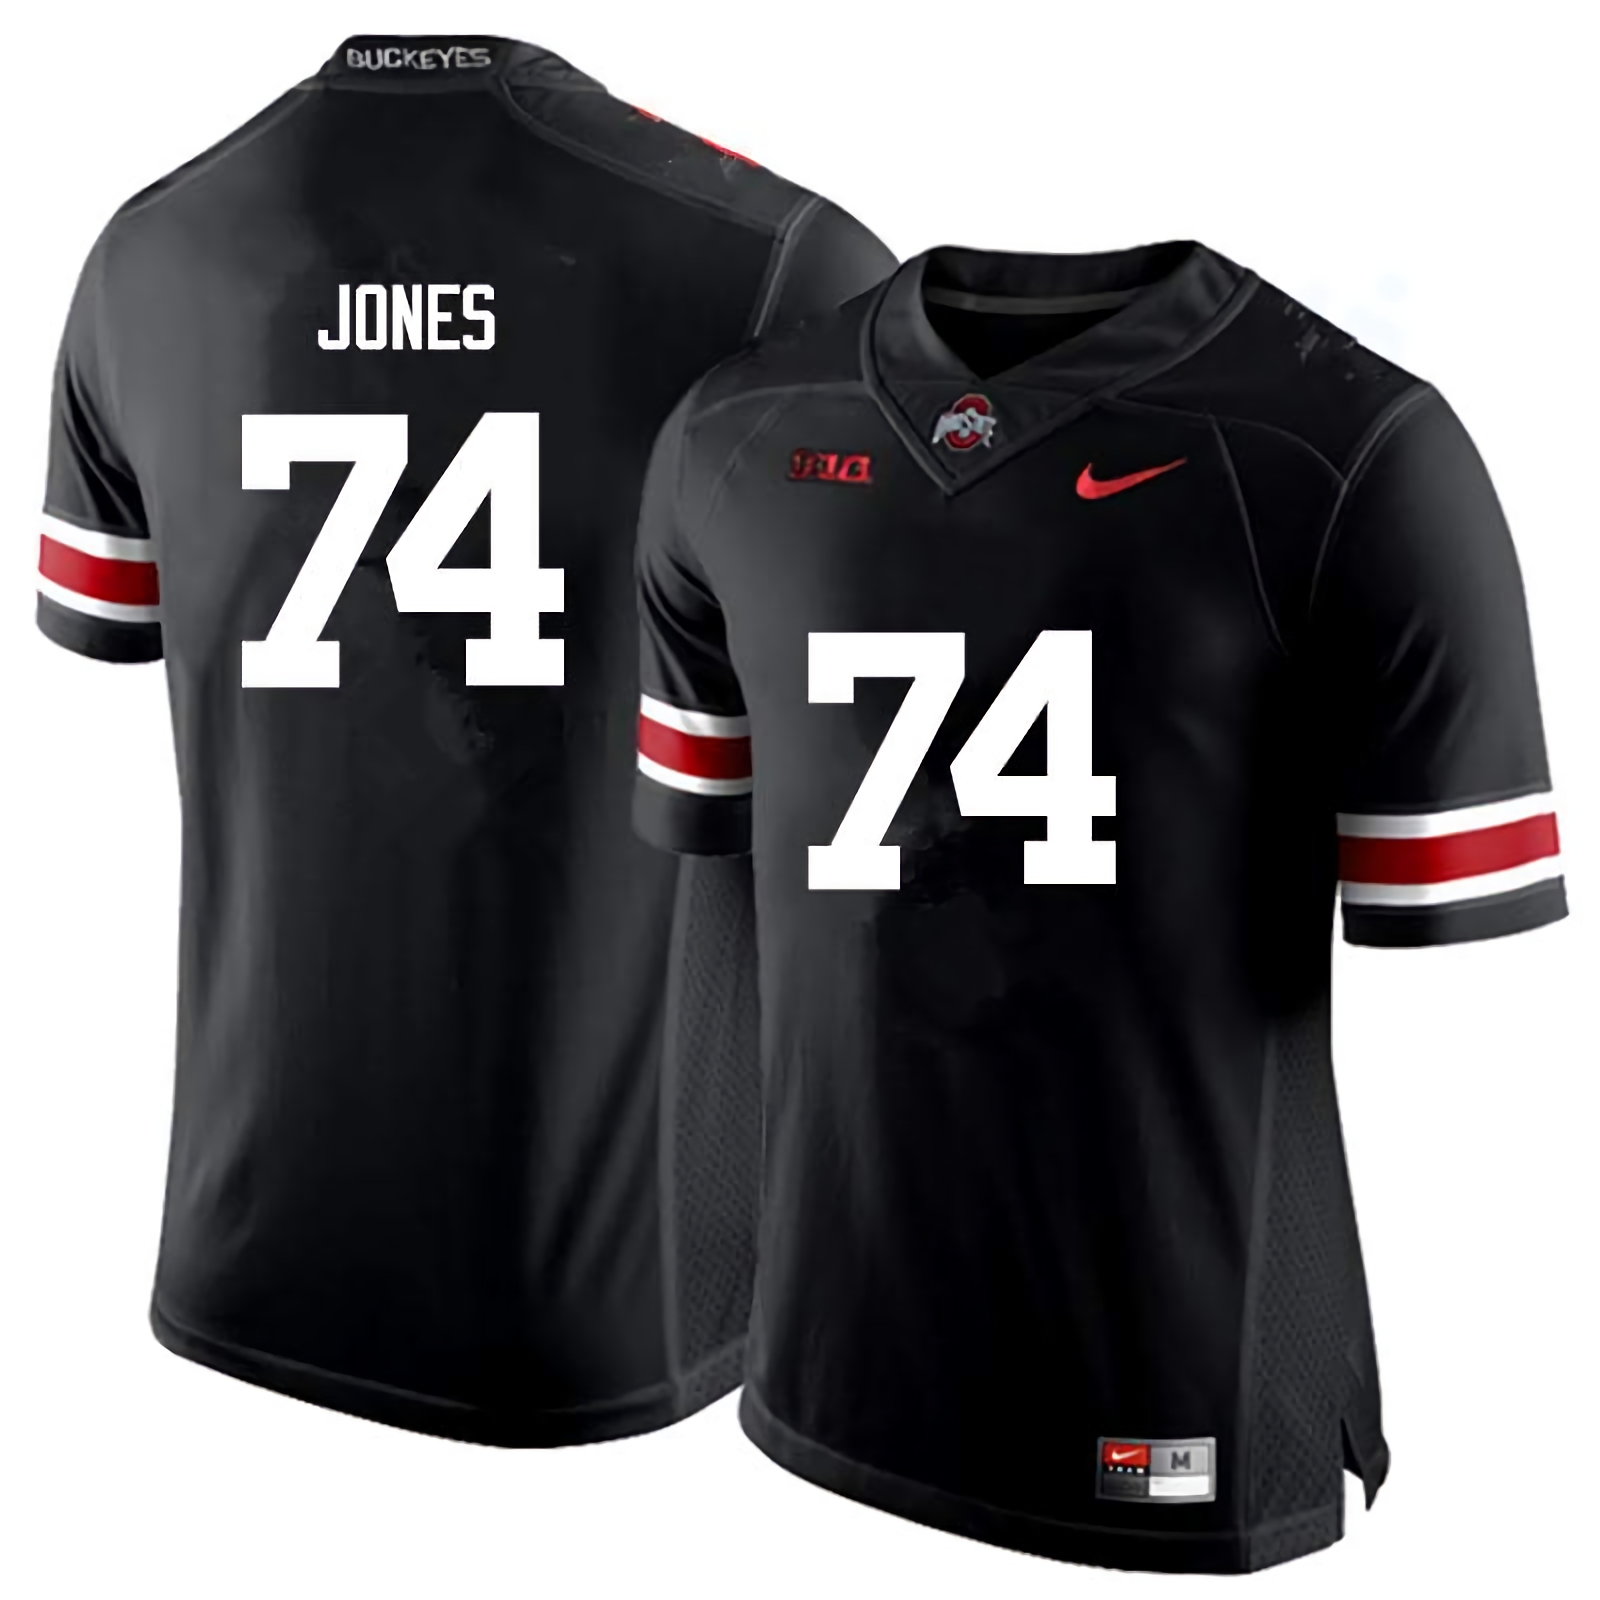 Jamarco Jones Ohio State Buckeyes Men's NCAA #74 Nike Black College Stitched Football Jersey EFG8456TA